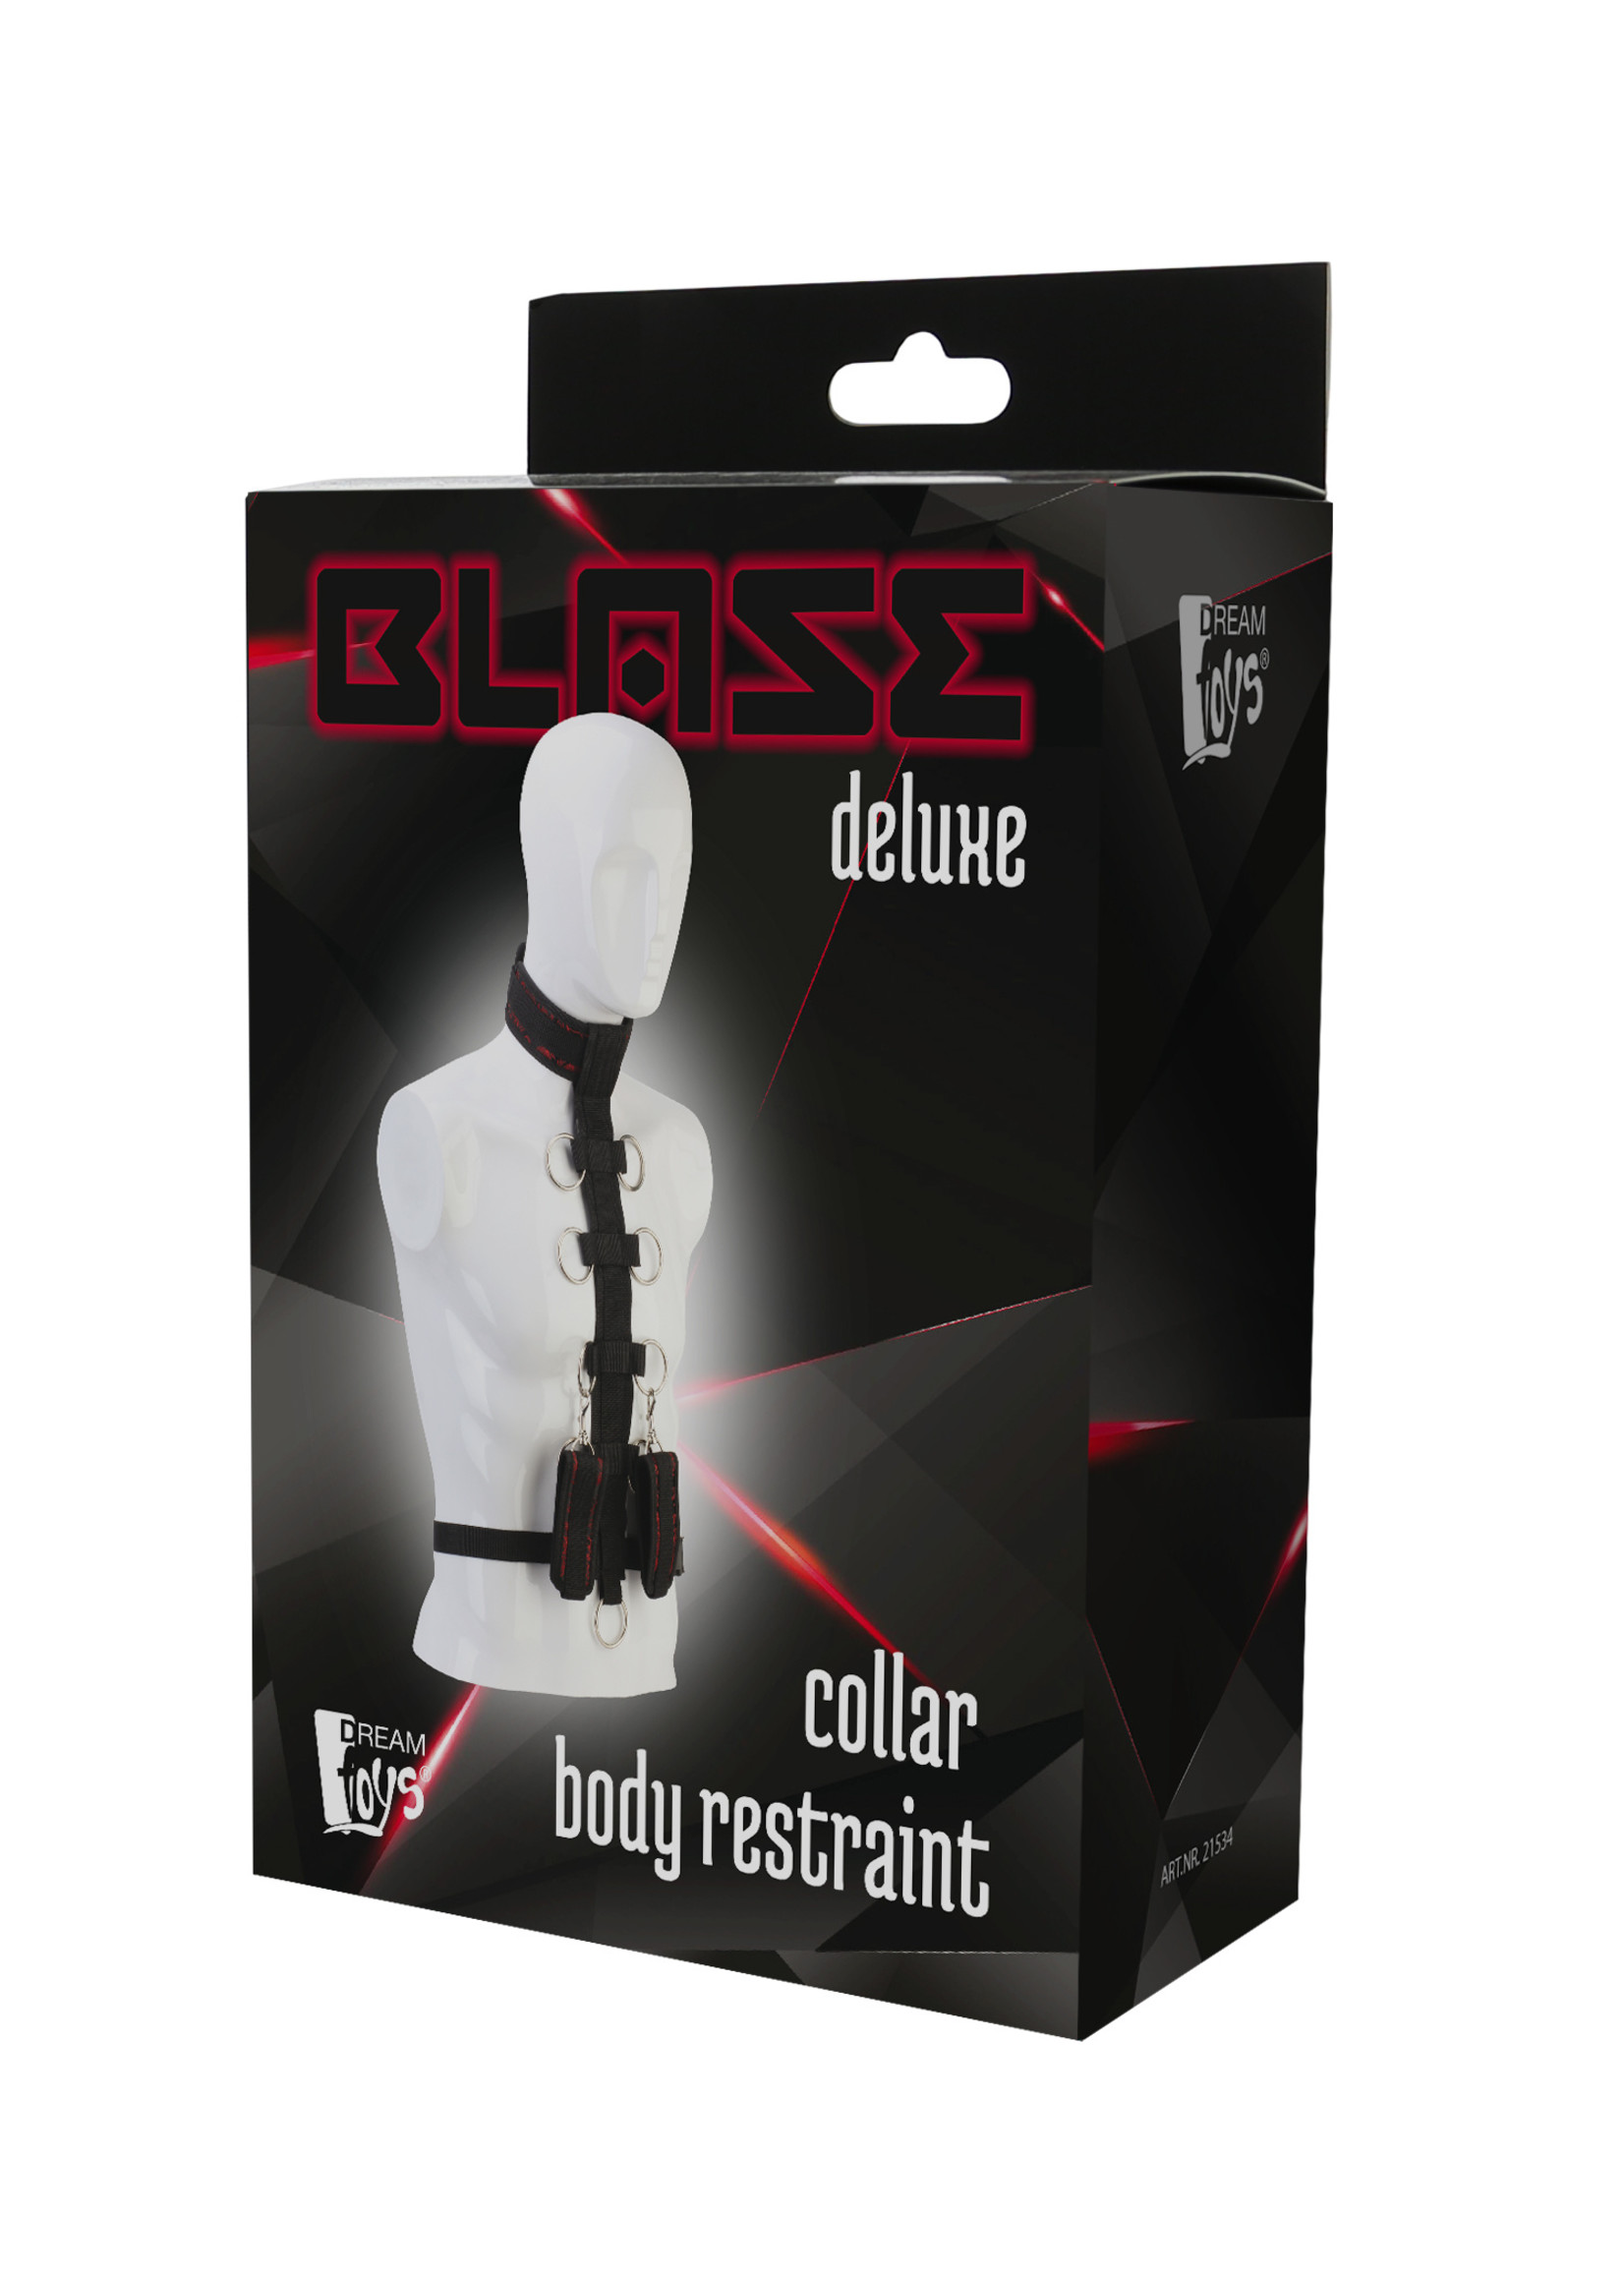 Dream Toys Blaze deluxe collar/body restraint